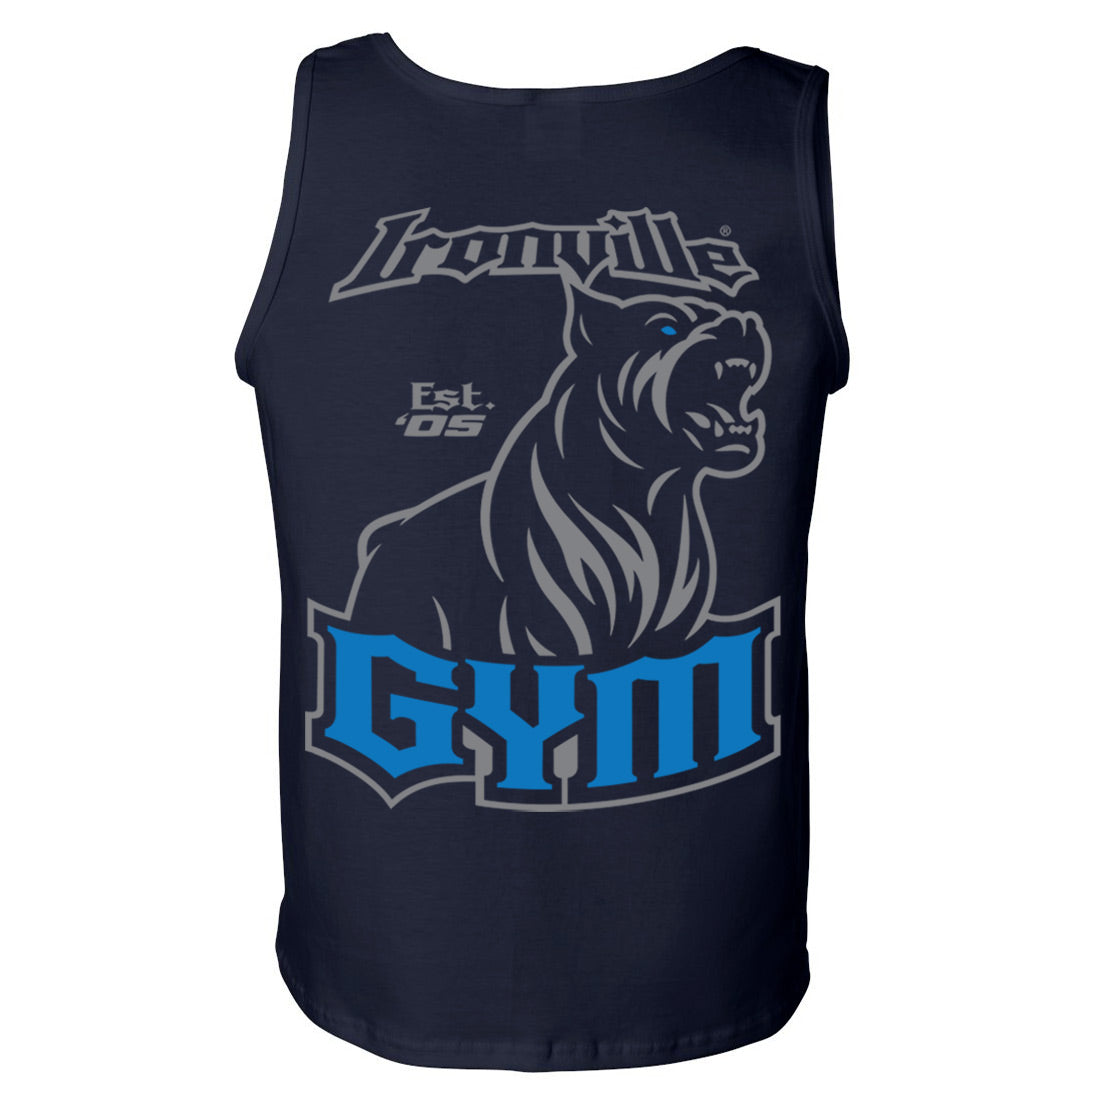 Ironville GYM PITBULL Standard Cut Gym Tank Top